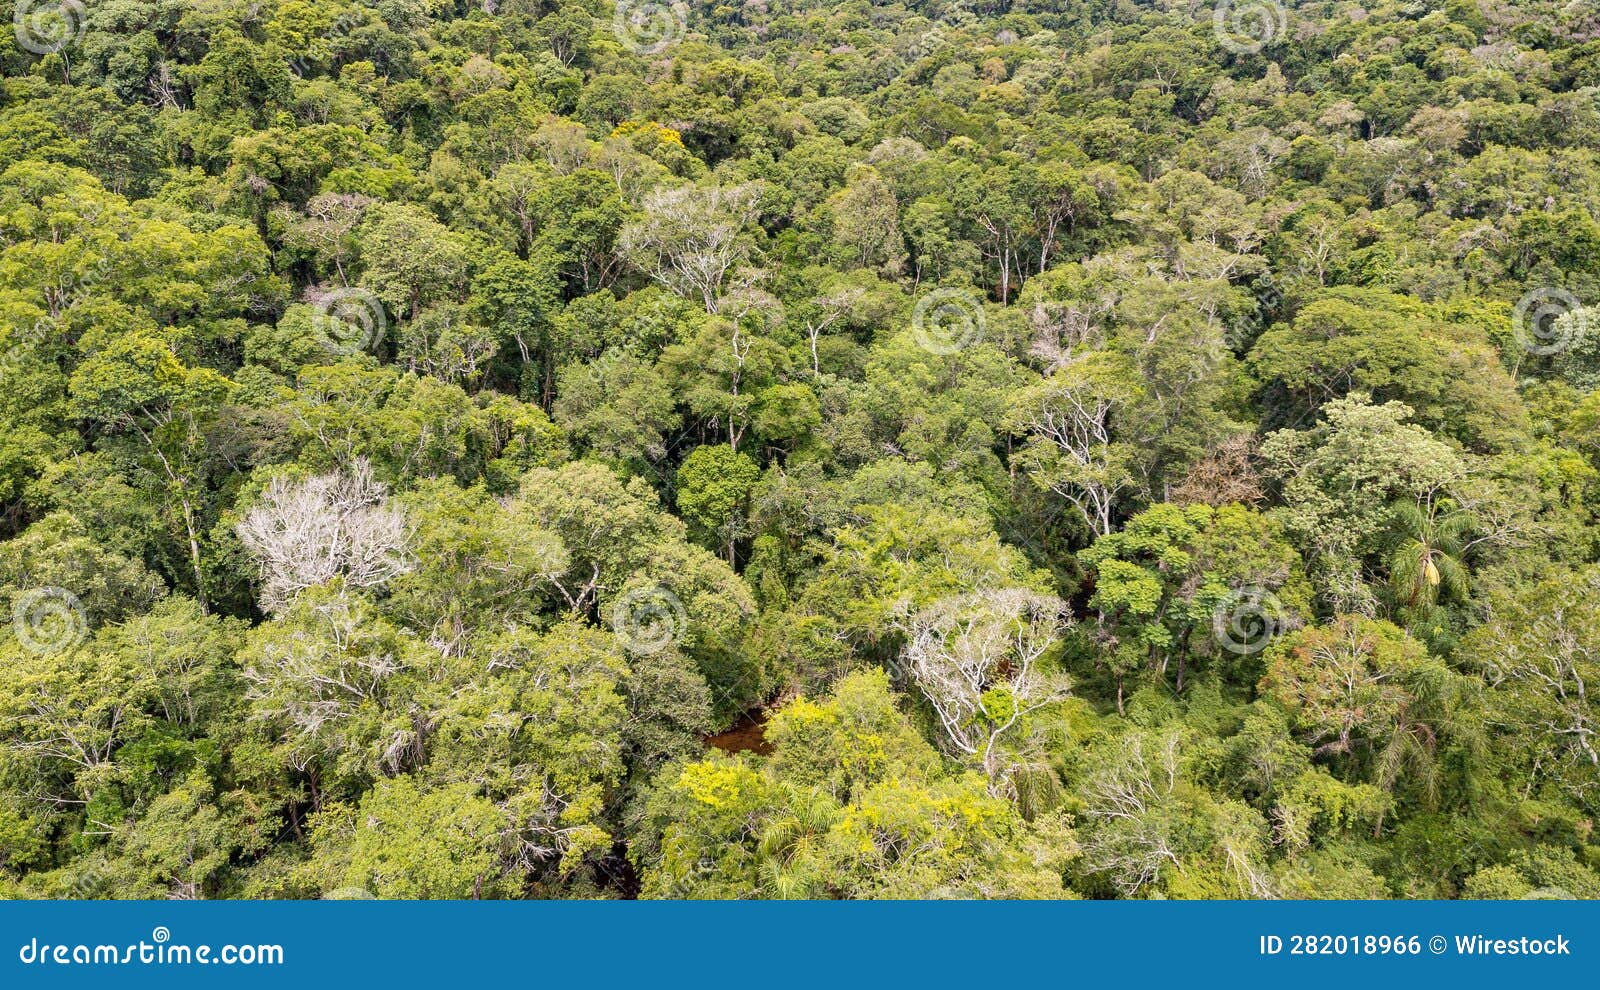 aerial view of dense green forests in salto encantado provincial park, argentina